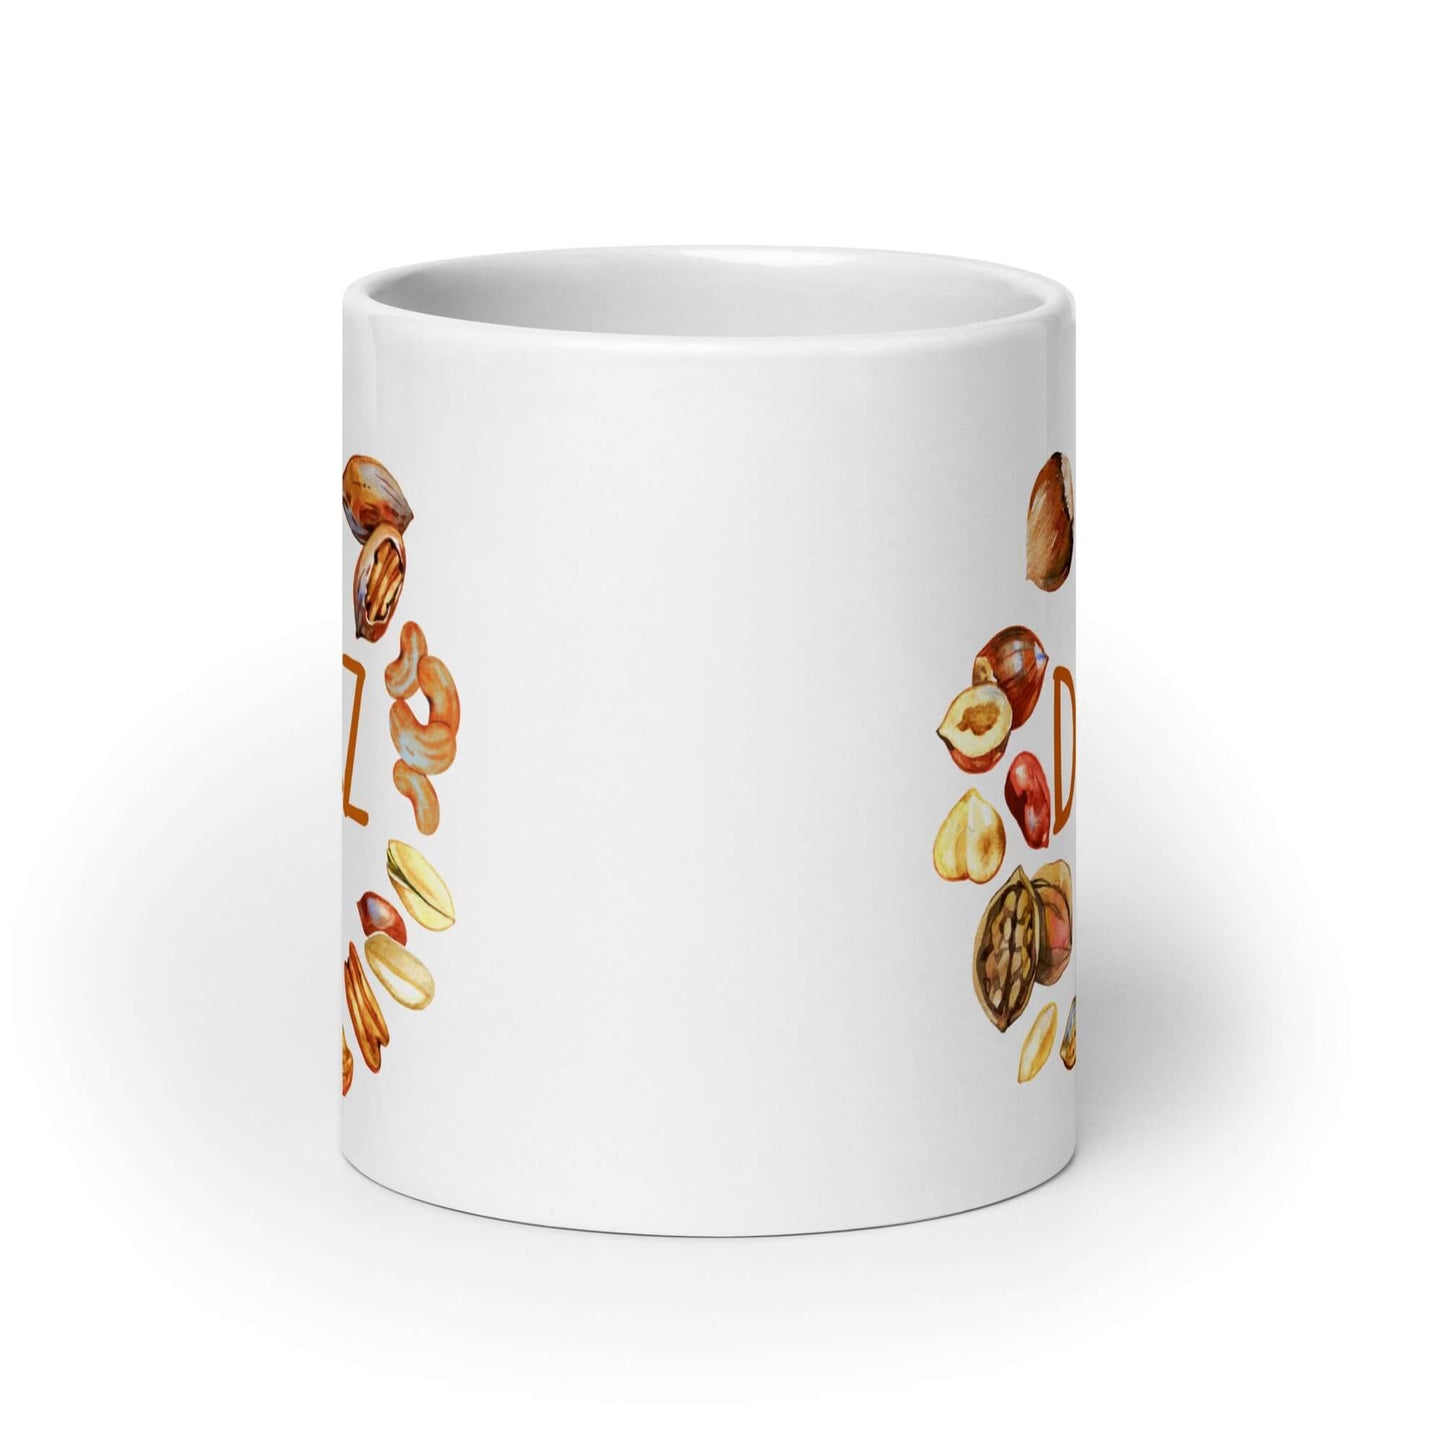 Deez nuts ceramic coffee mug